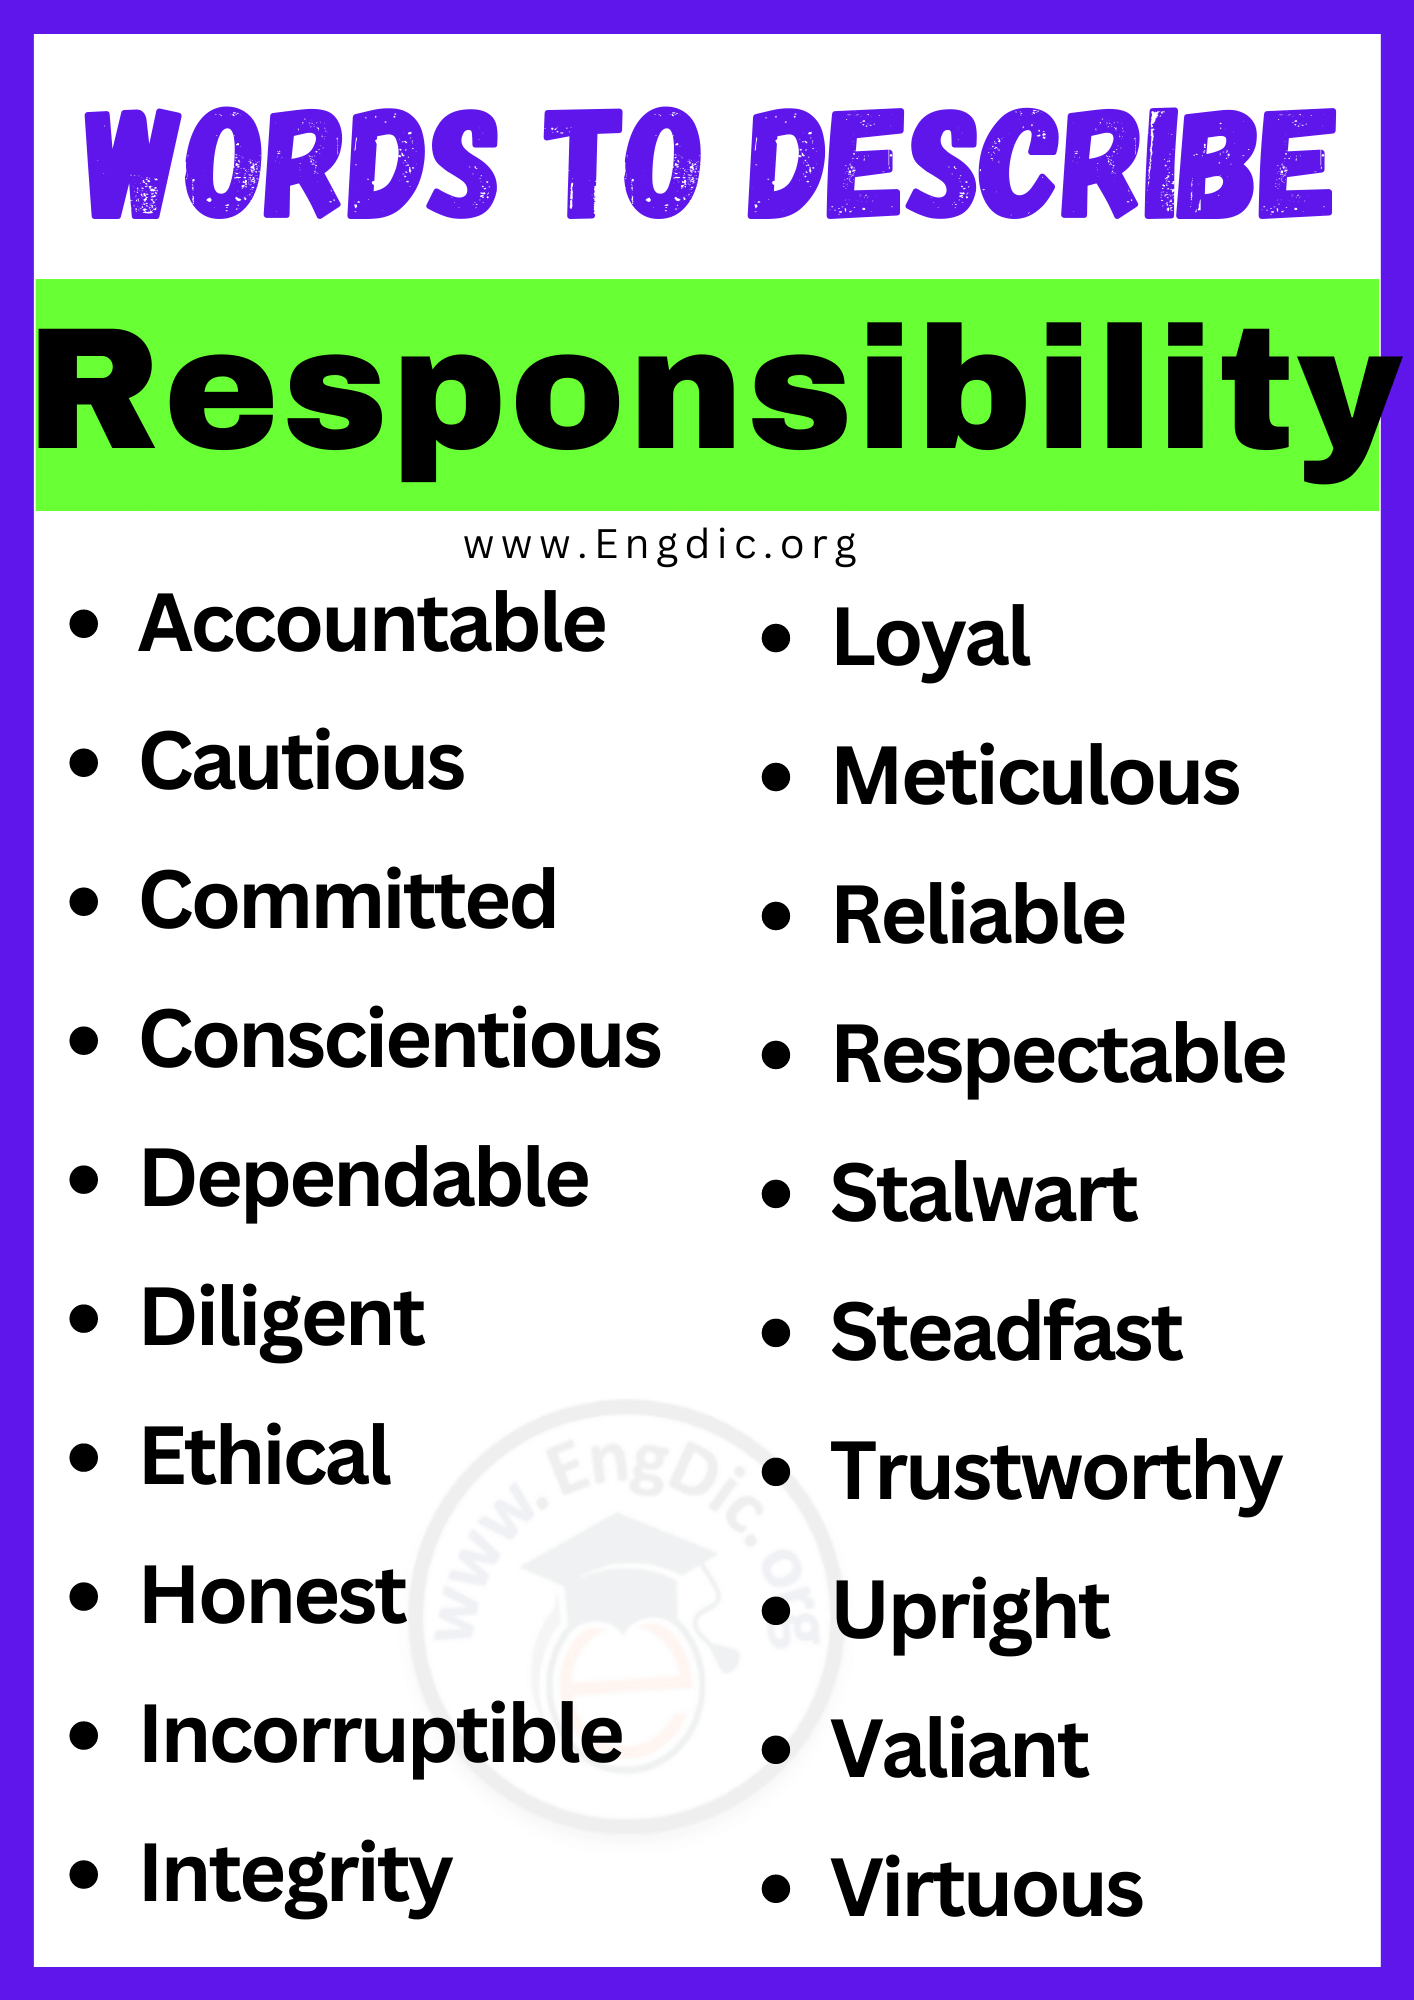 Words to Describe Responsibility